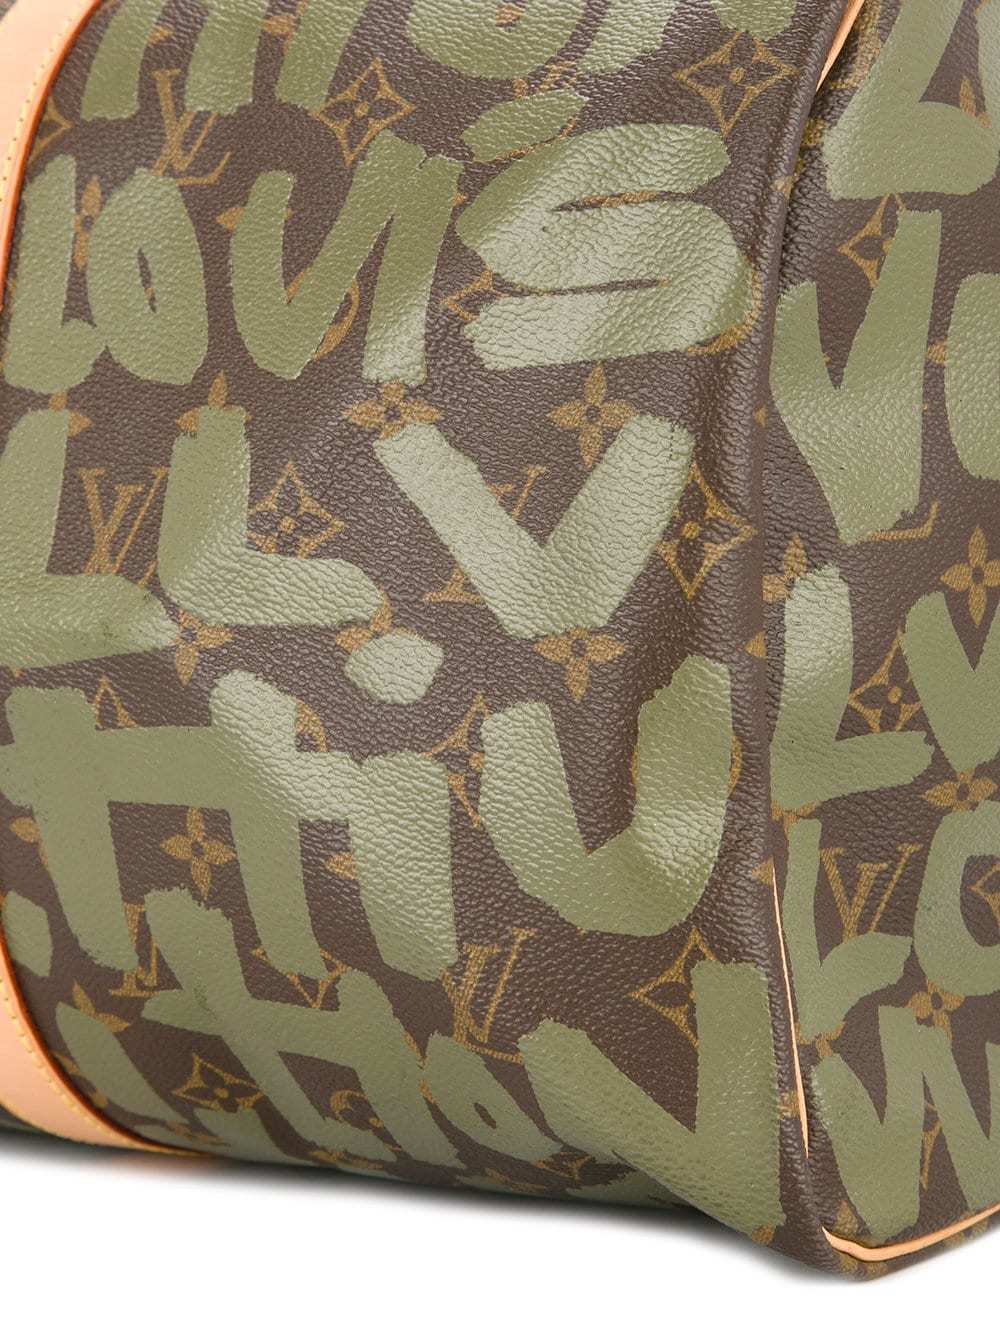 Louis Vuitton Vintage Keepall 50 Travel Bag, $6,506, farfetch.com